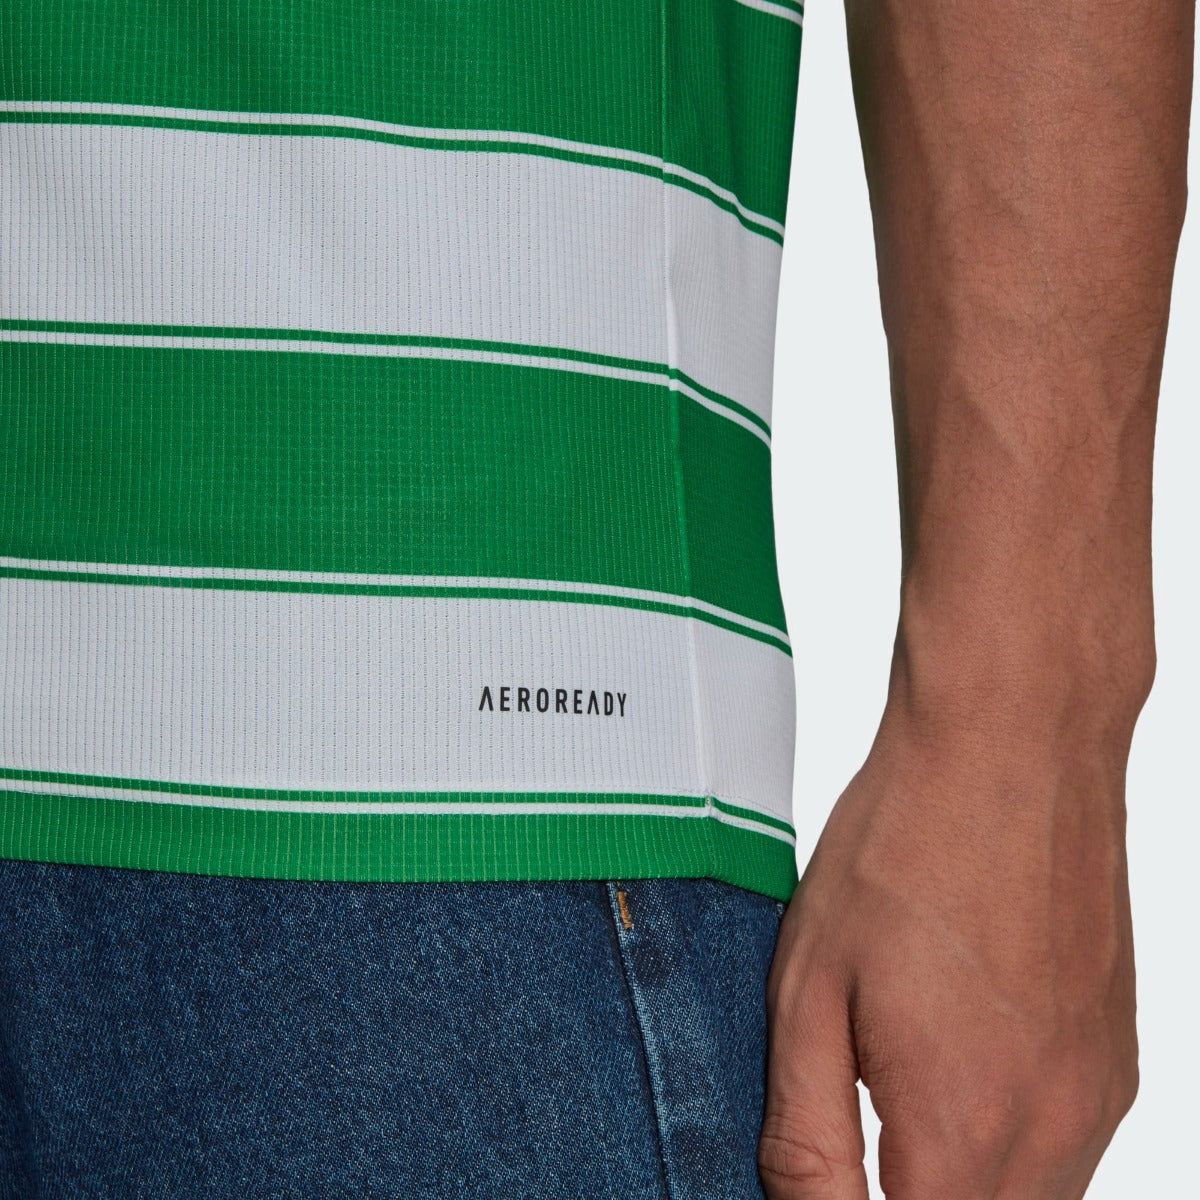 Celtic FC 2021/22 adidas Home Kit - FOOTBALL FASHION